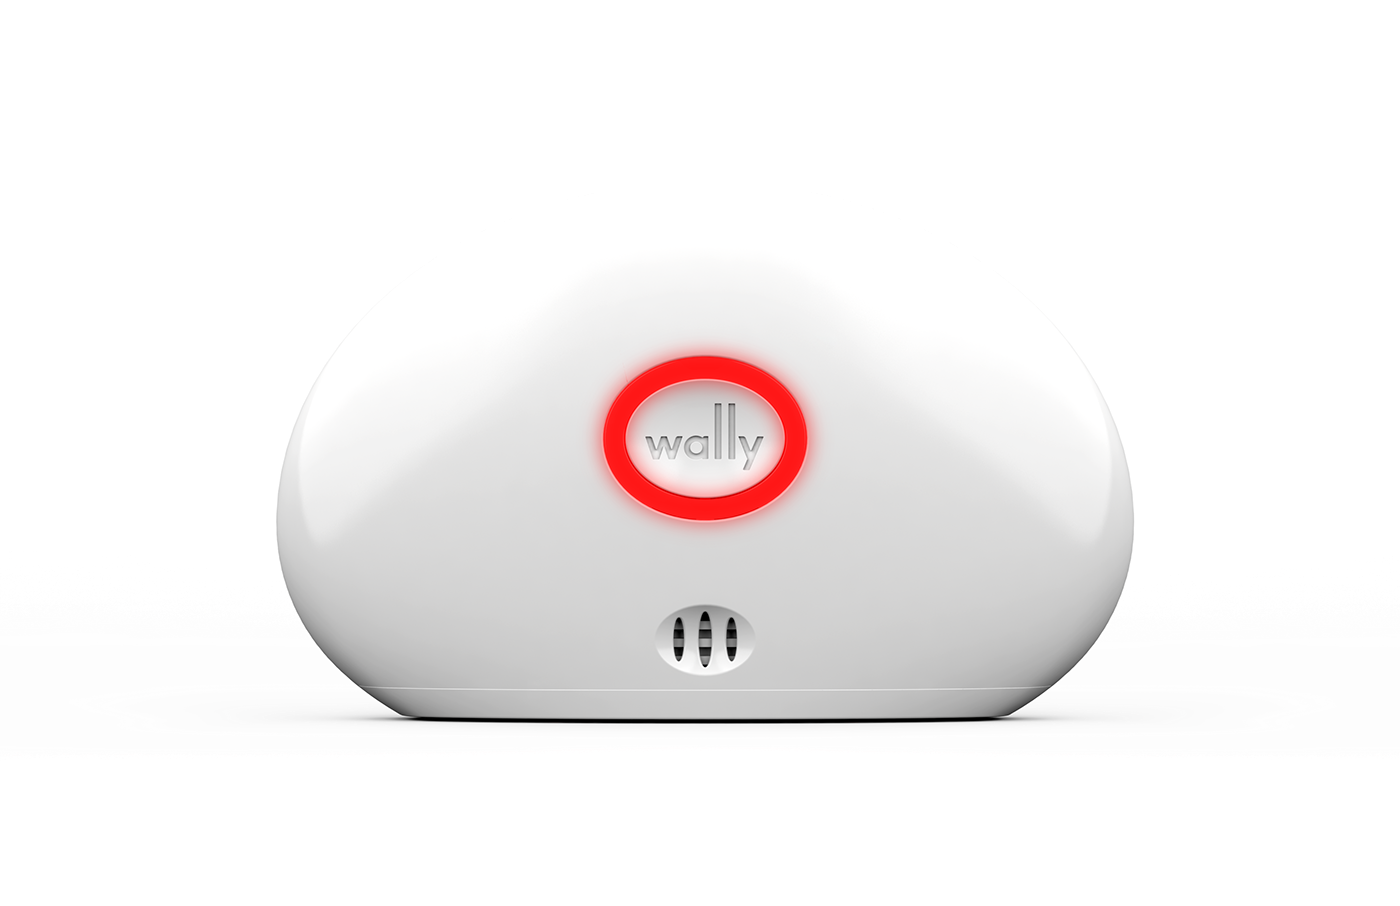 Adobe Portfolio consumer electronics Technology home sensor Sensor System SNUPI water leakage home network network cloud seattle strategy